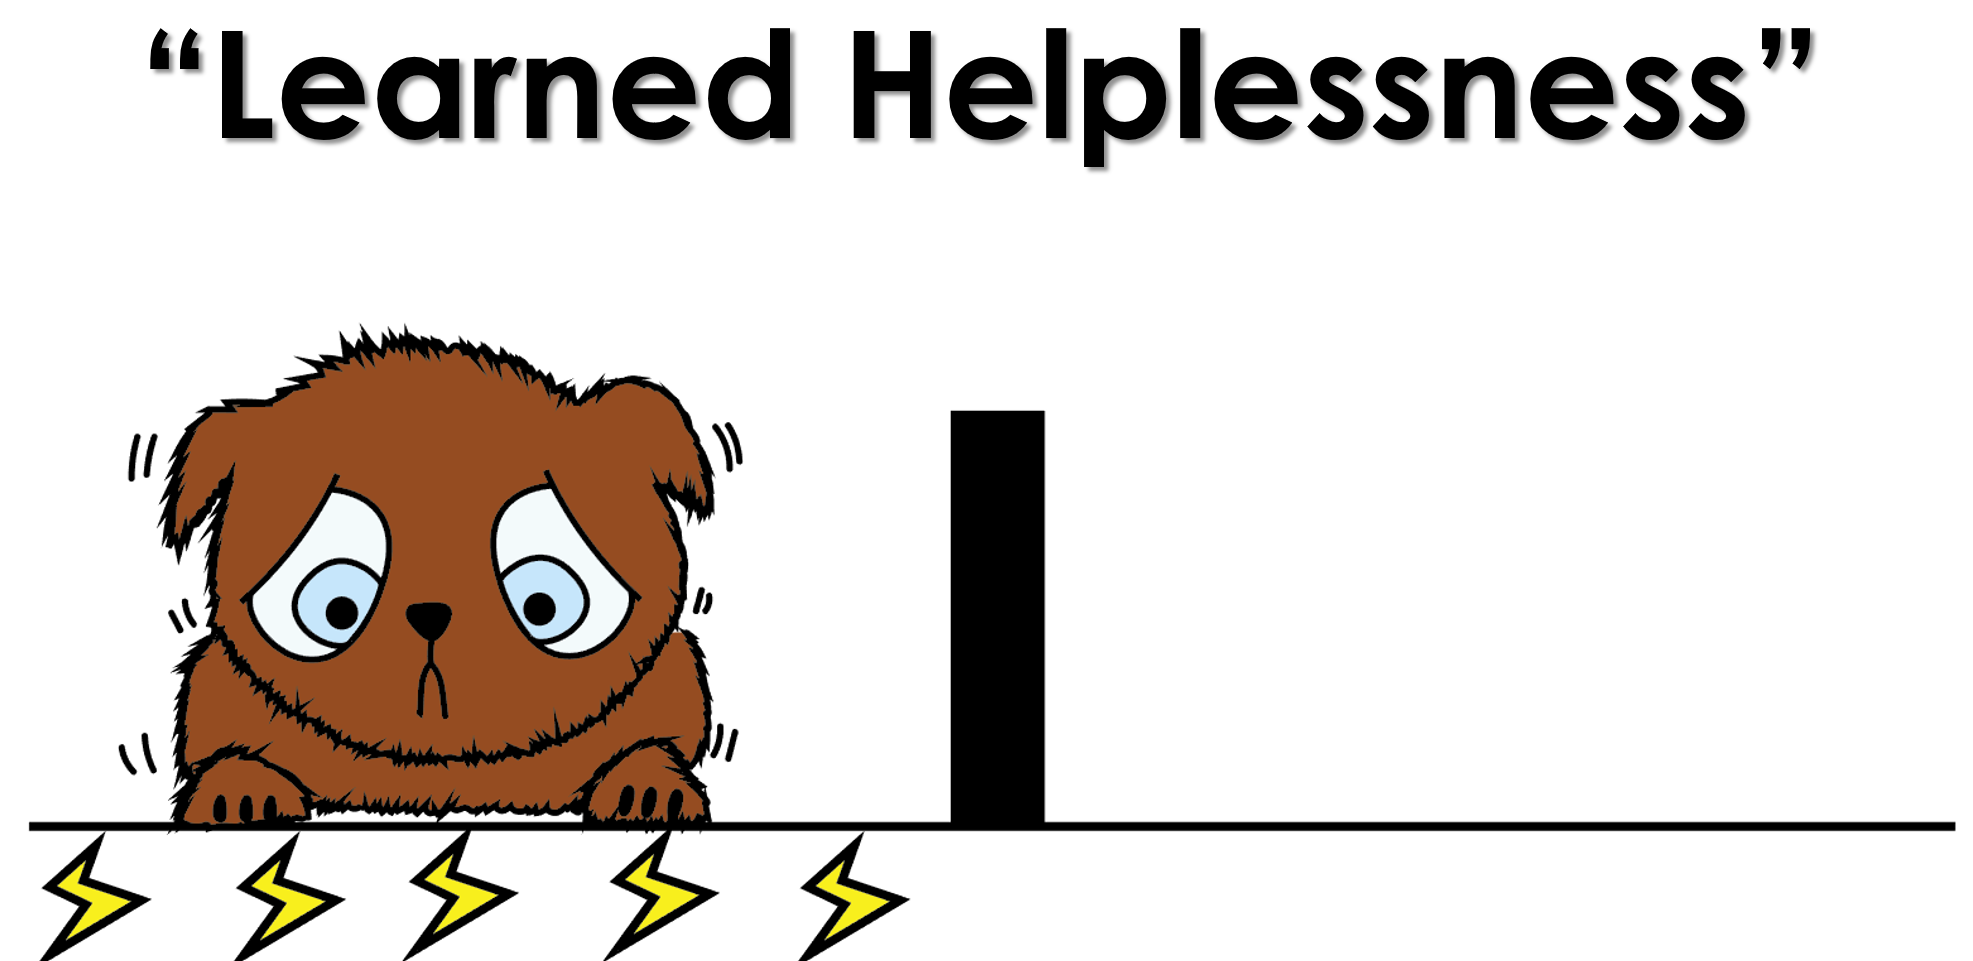 Illustration of learned helplessness